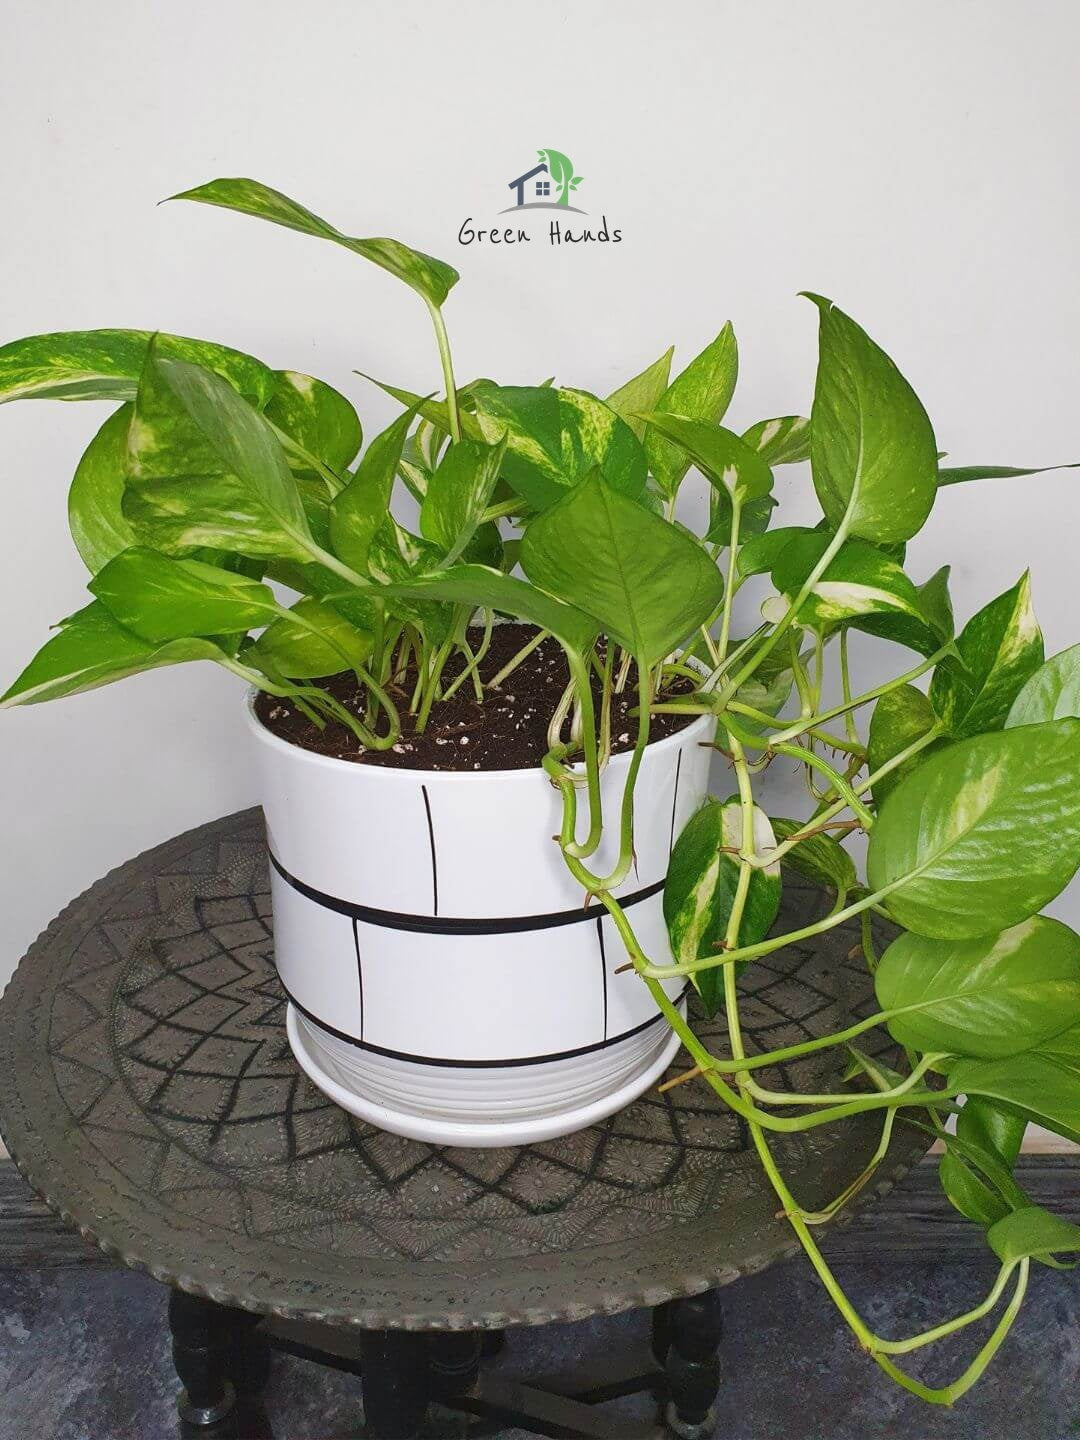 Medium sized Desktop Money Plant in white ceramic pot